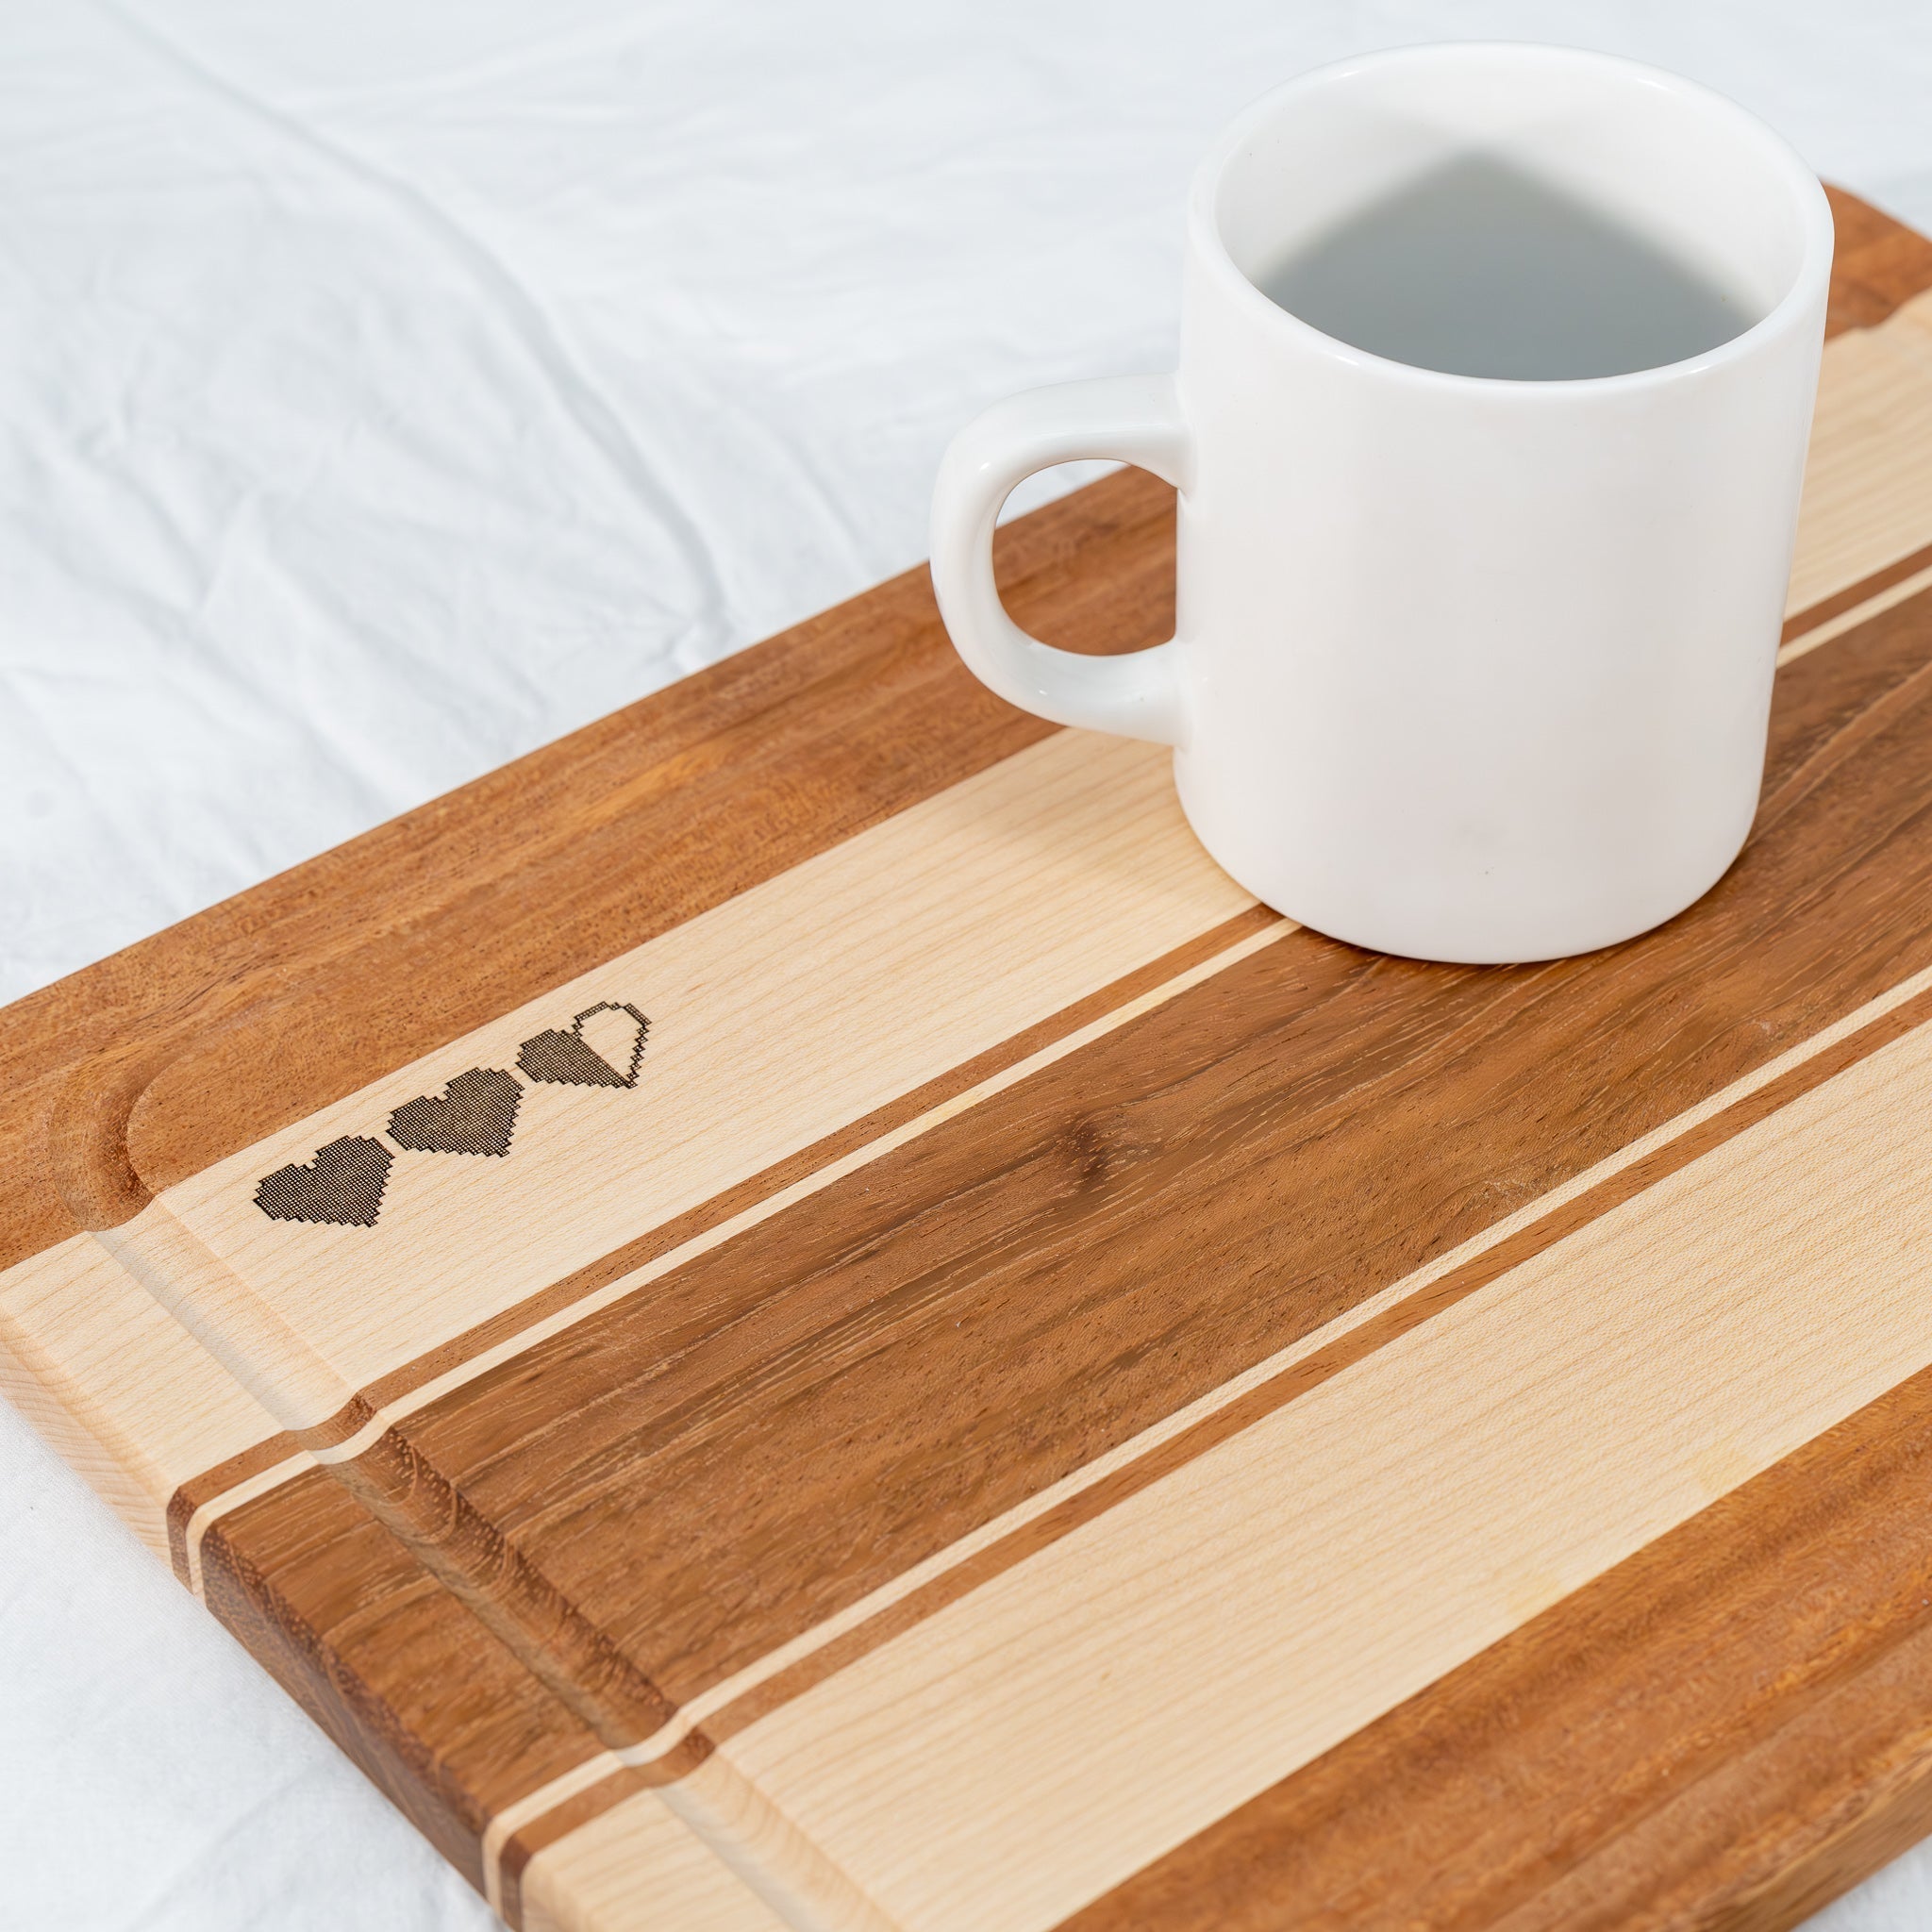 Handmade Hard Maple and Jatoba cutting board with Zelda-themed laser engraved hearts and mug